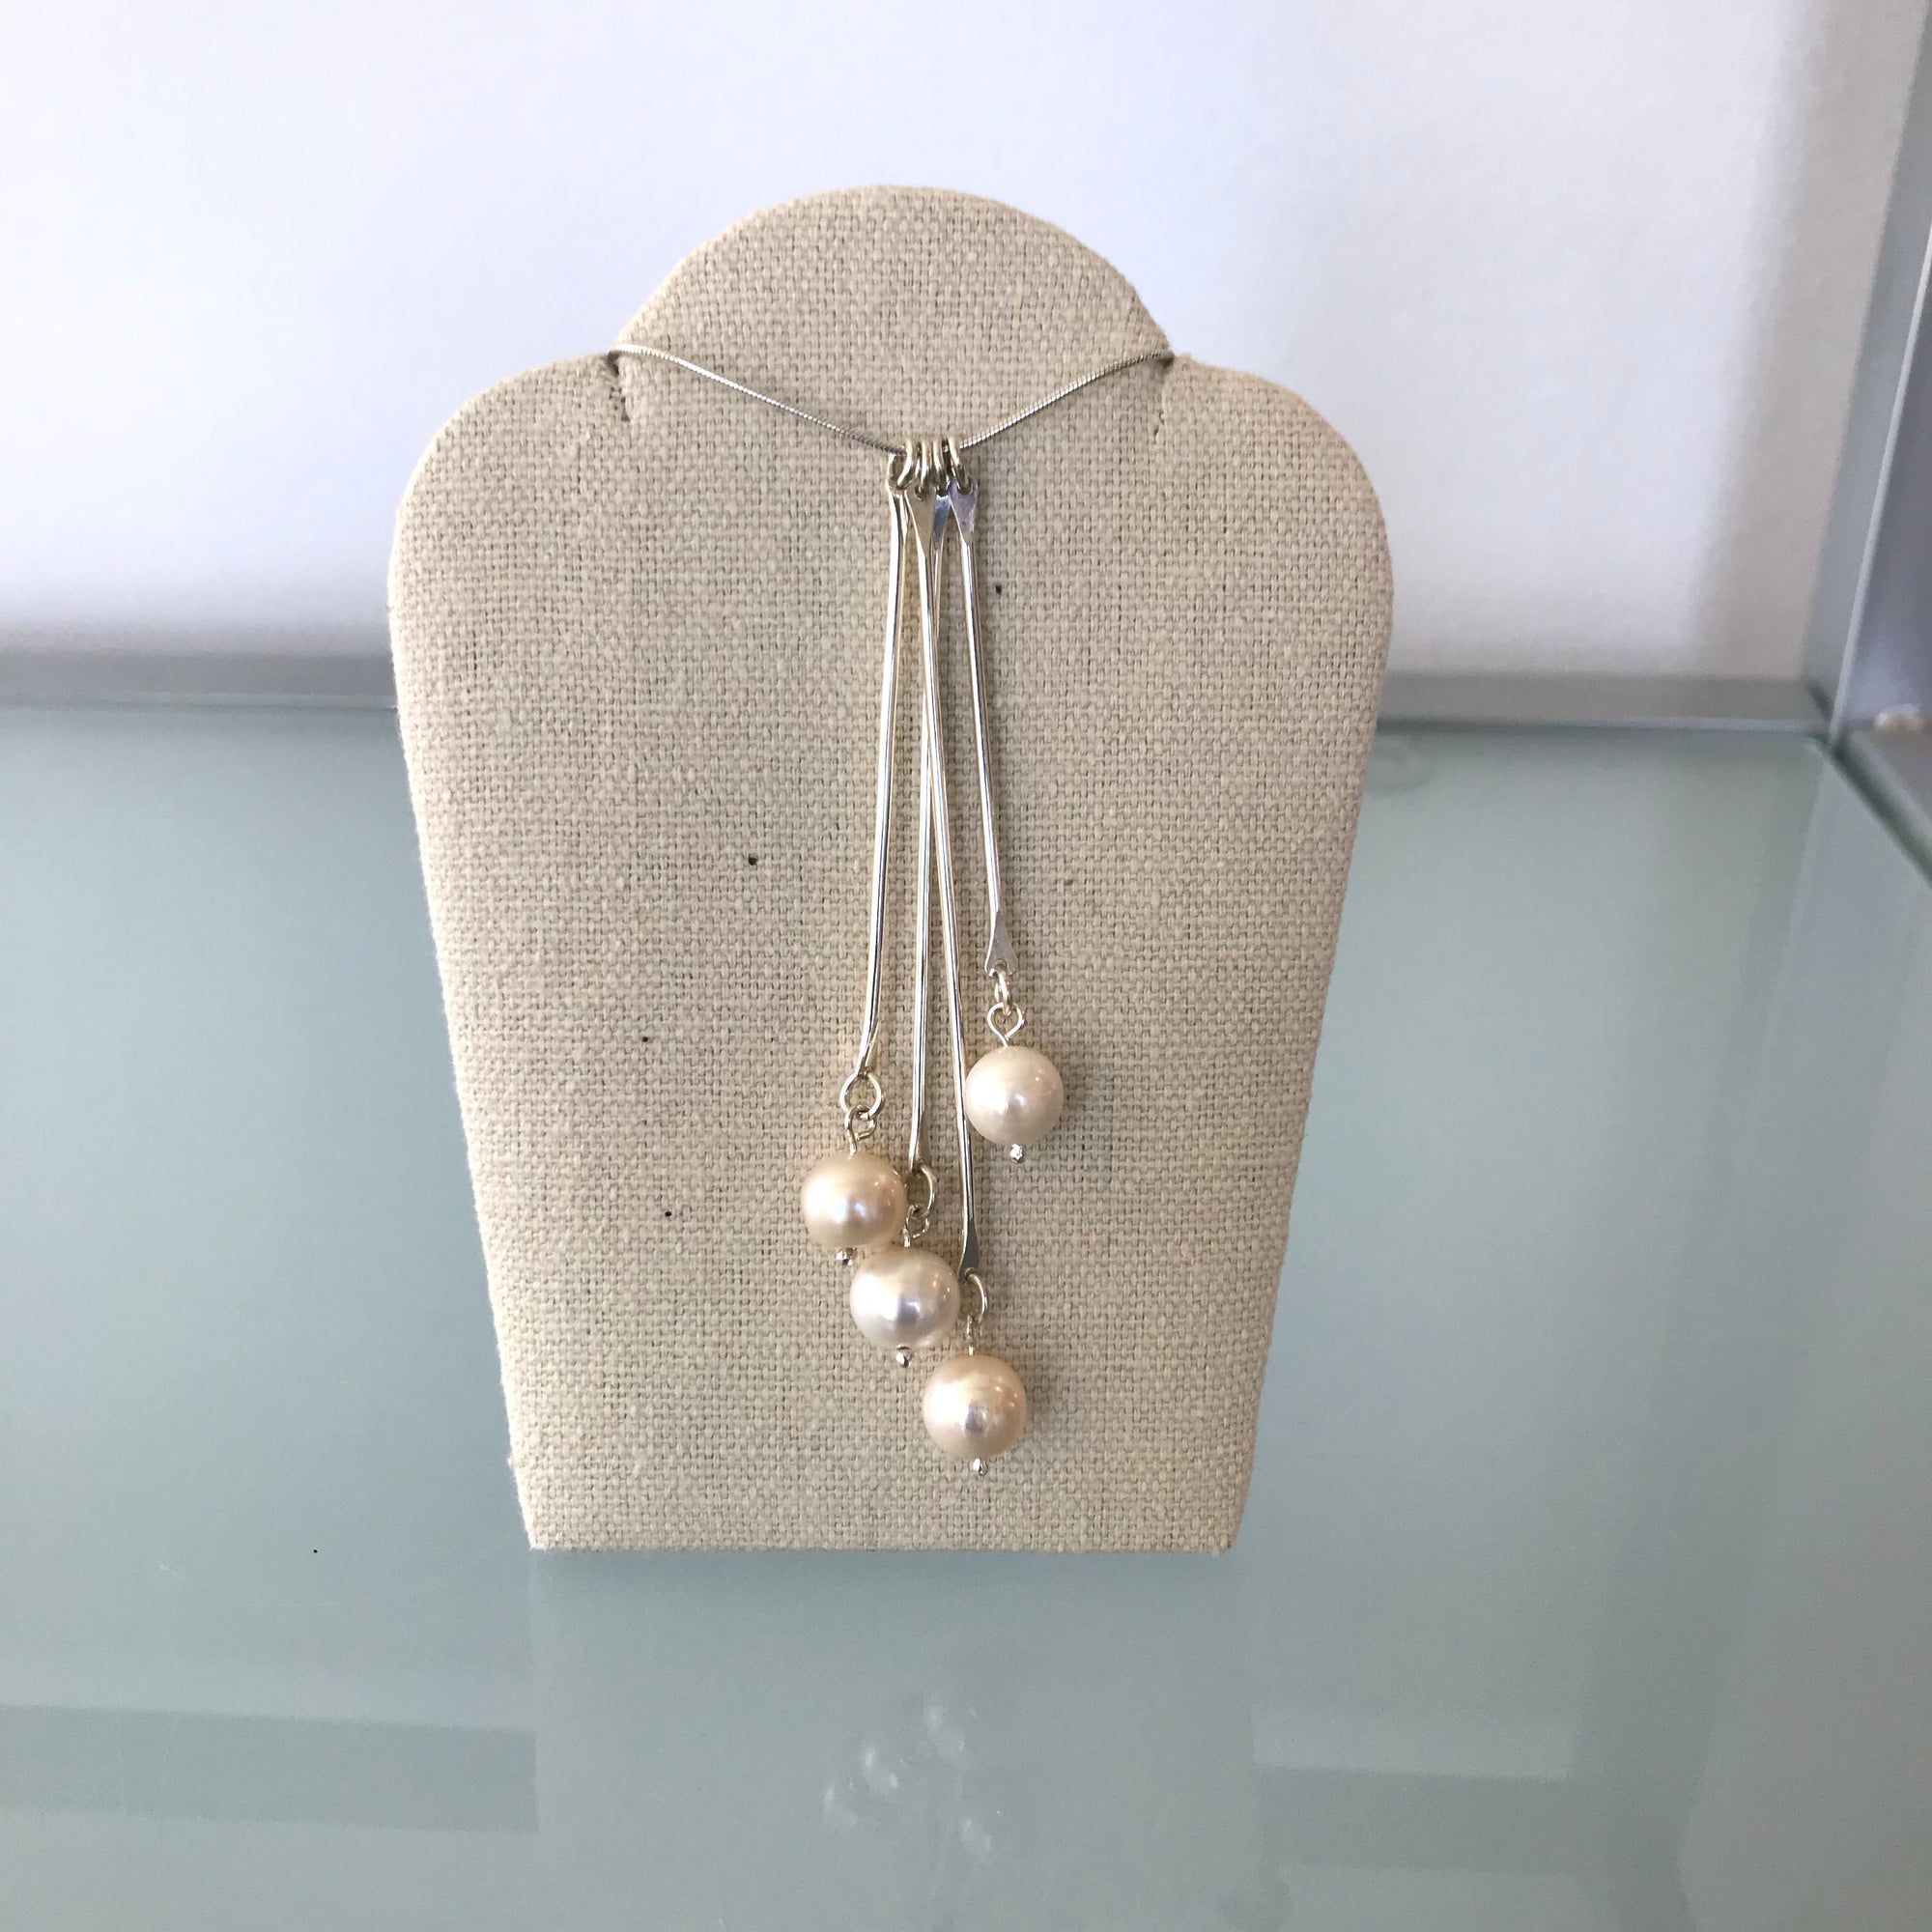 Mindan's Designs - Jewellery - White Pearls on Silver Bones Necklace